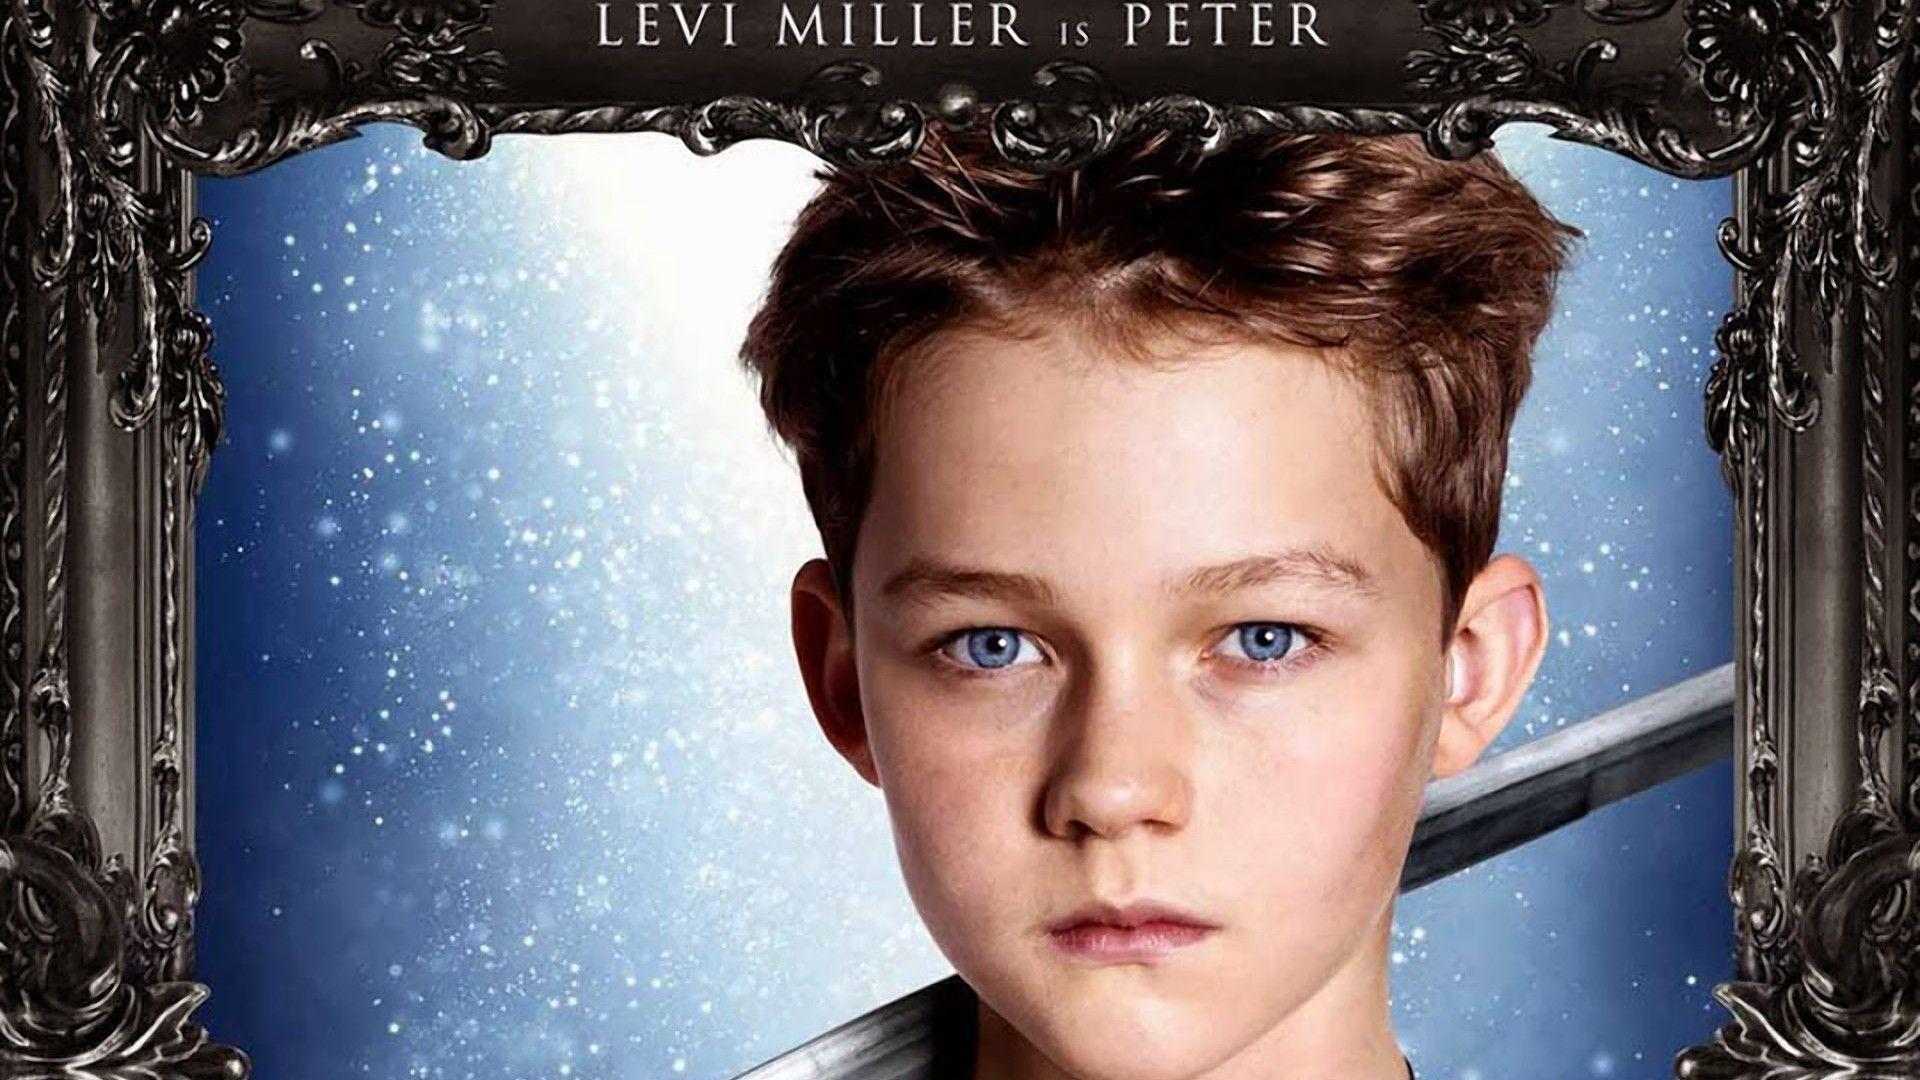 Levi Miller as Peter in Pan Movie Wallpaper Wide or HD. Male